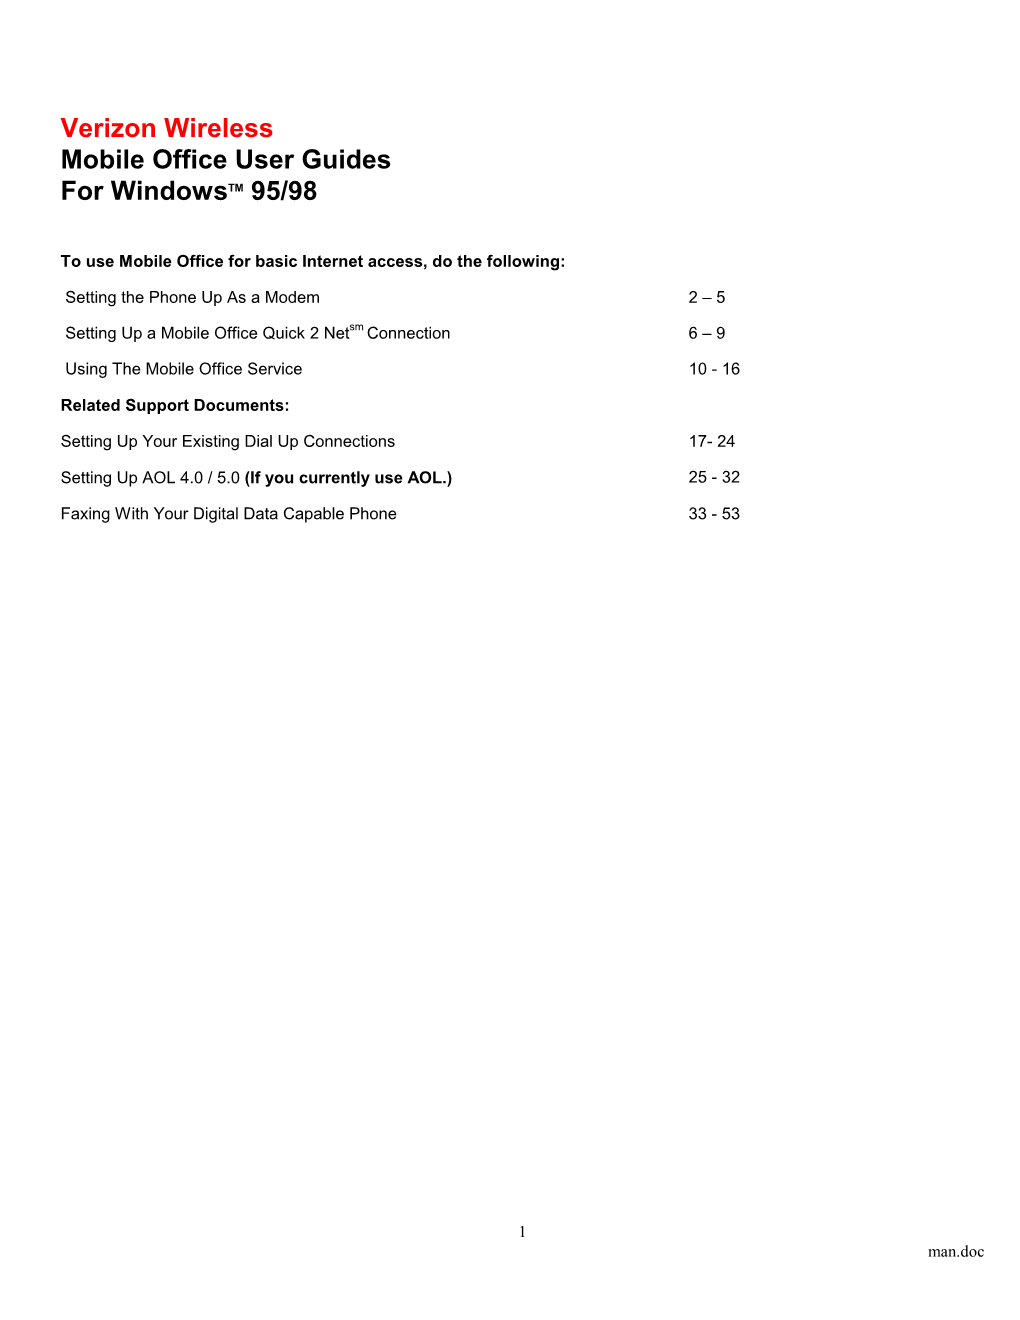 Verizon Wireless Mobile Office User Guides for Windowstm 95/98